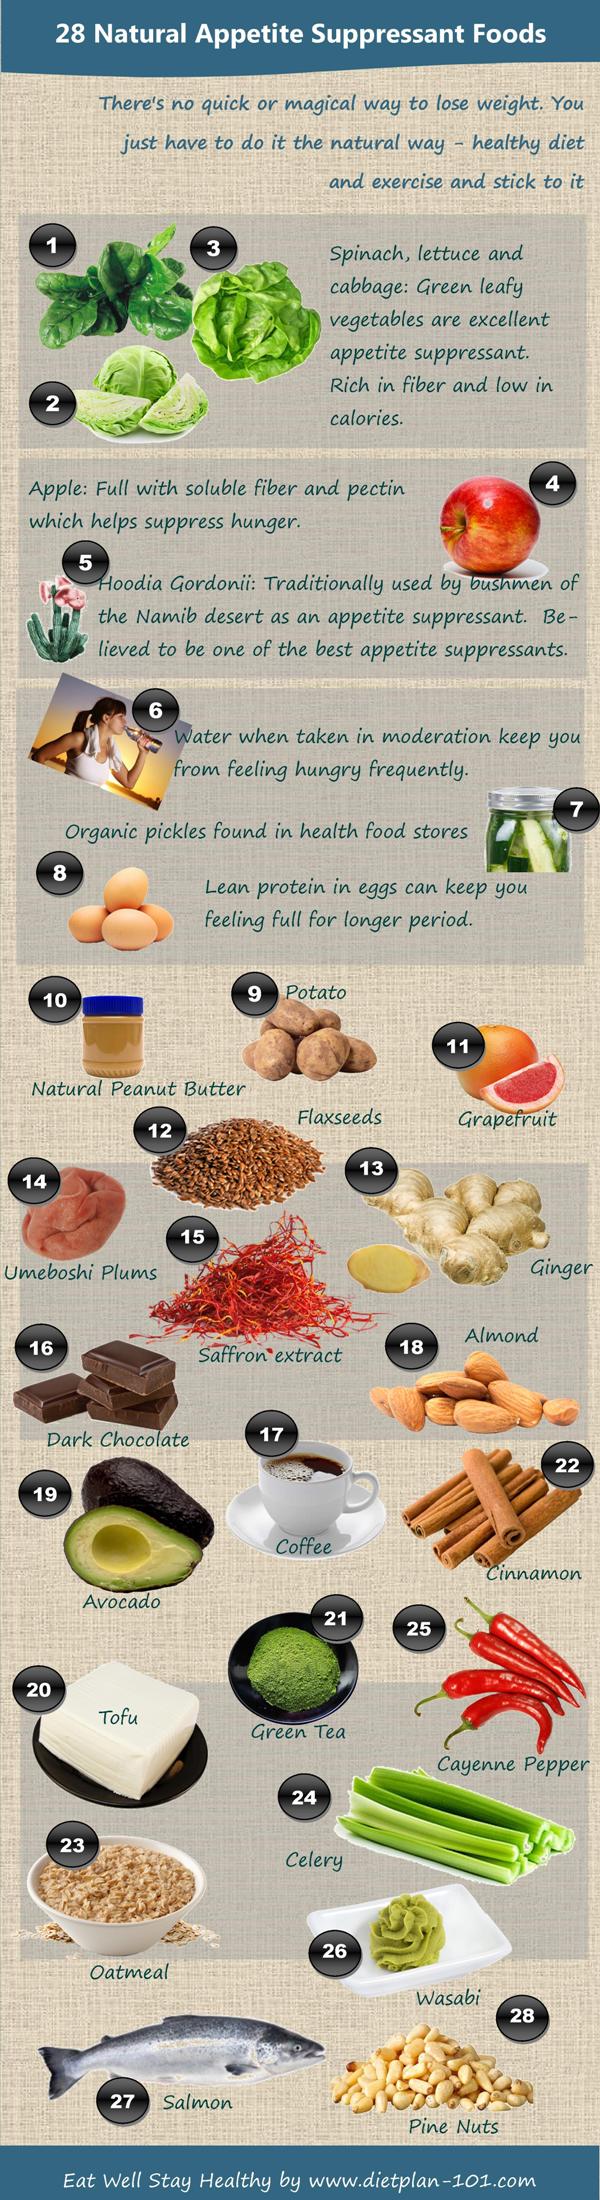 28 Natural Appetite Suppressant Food